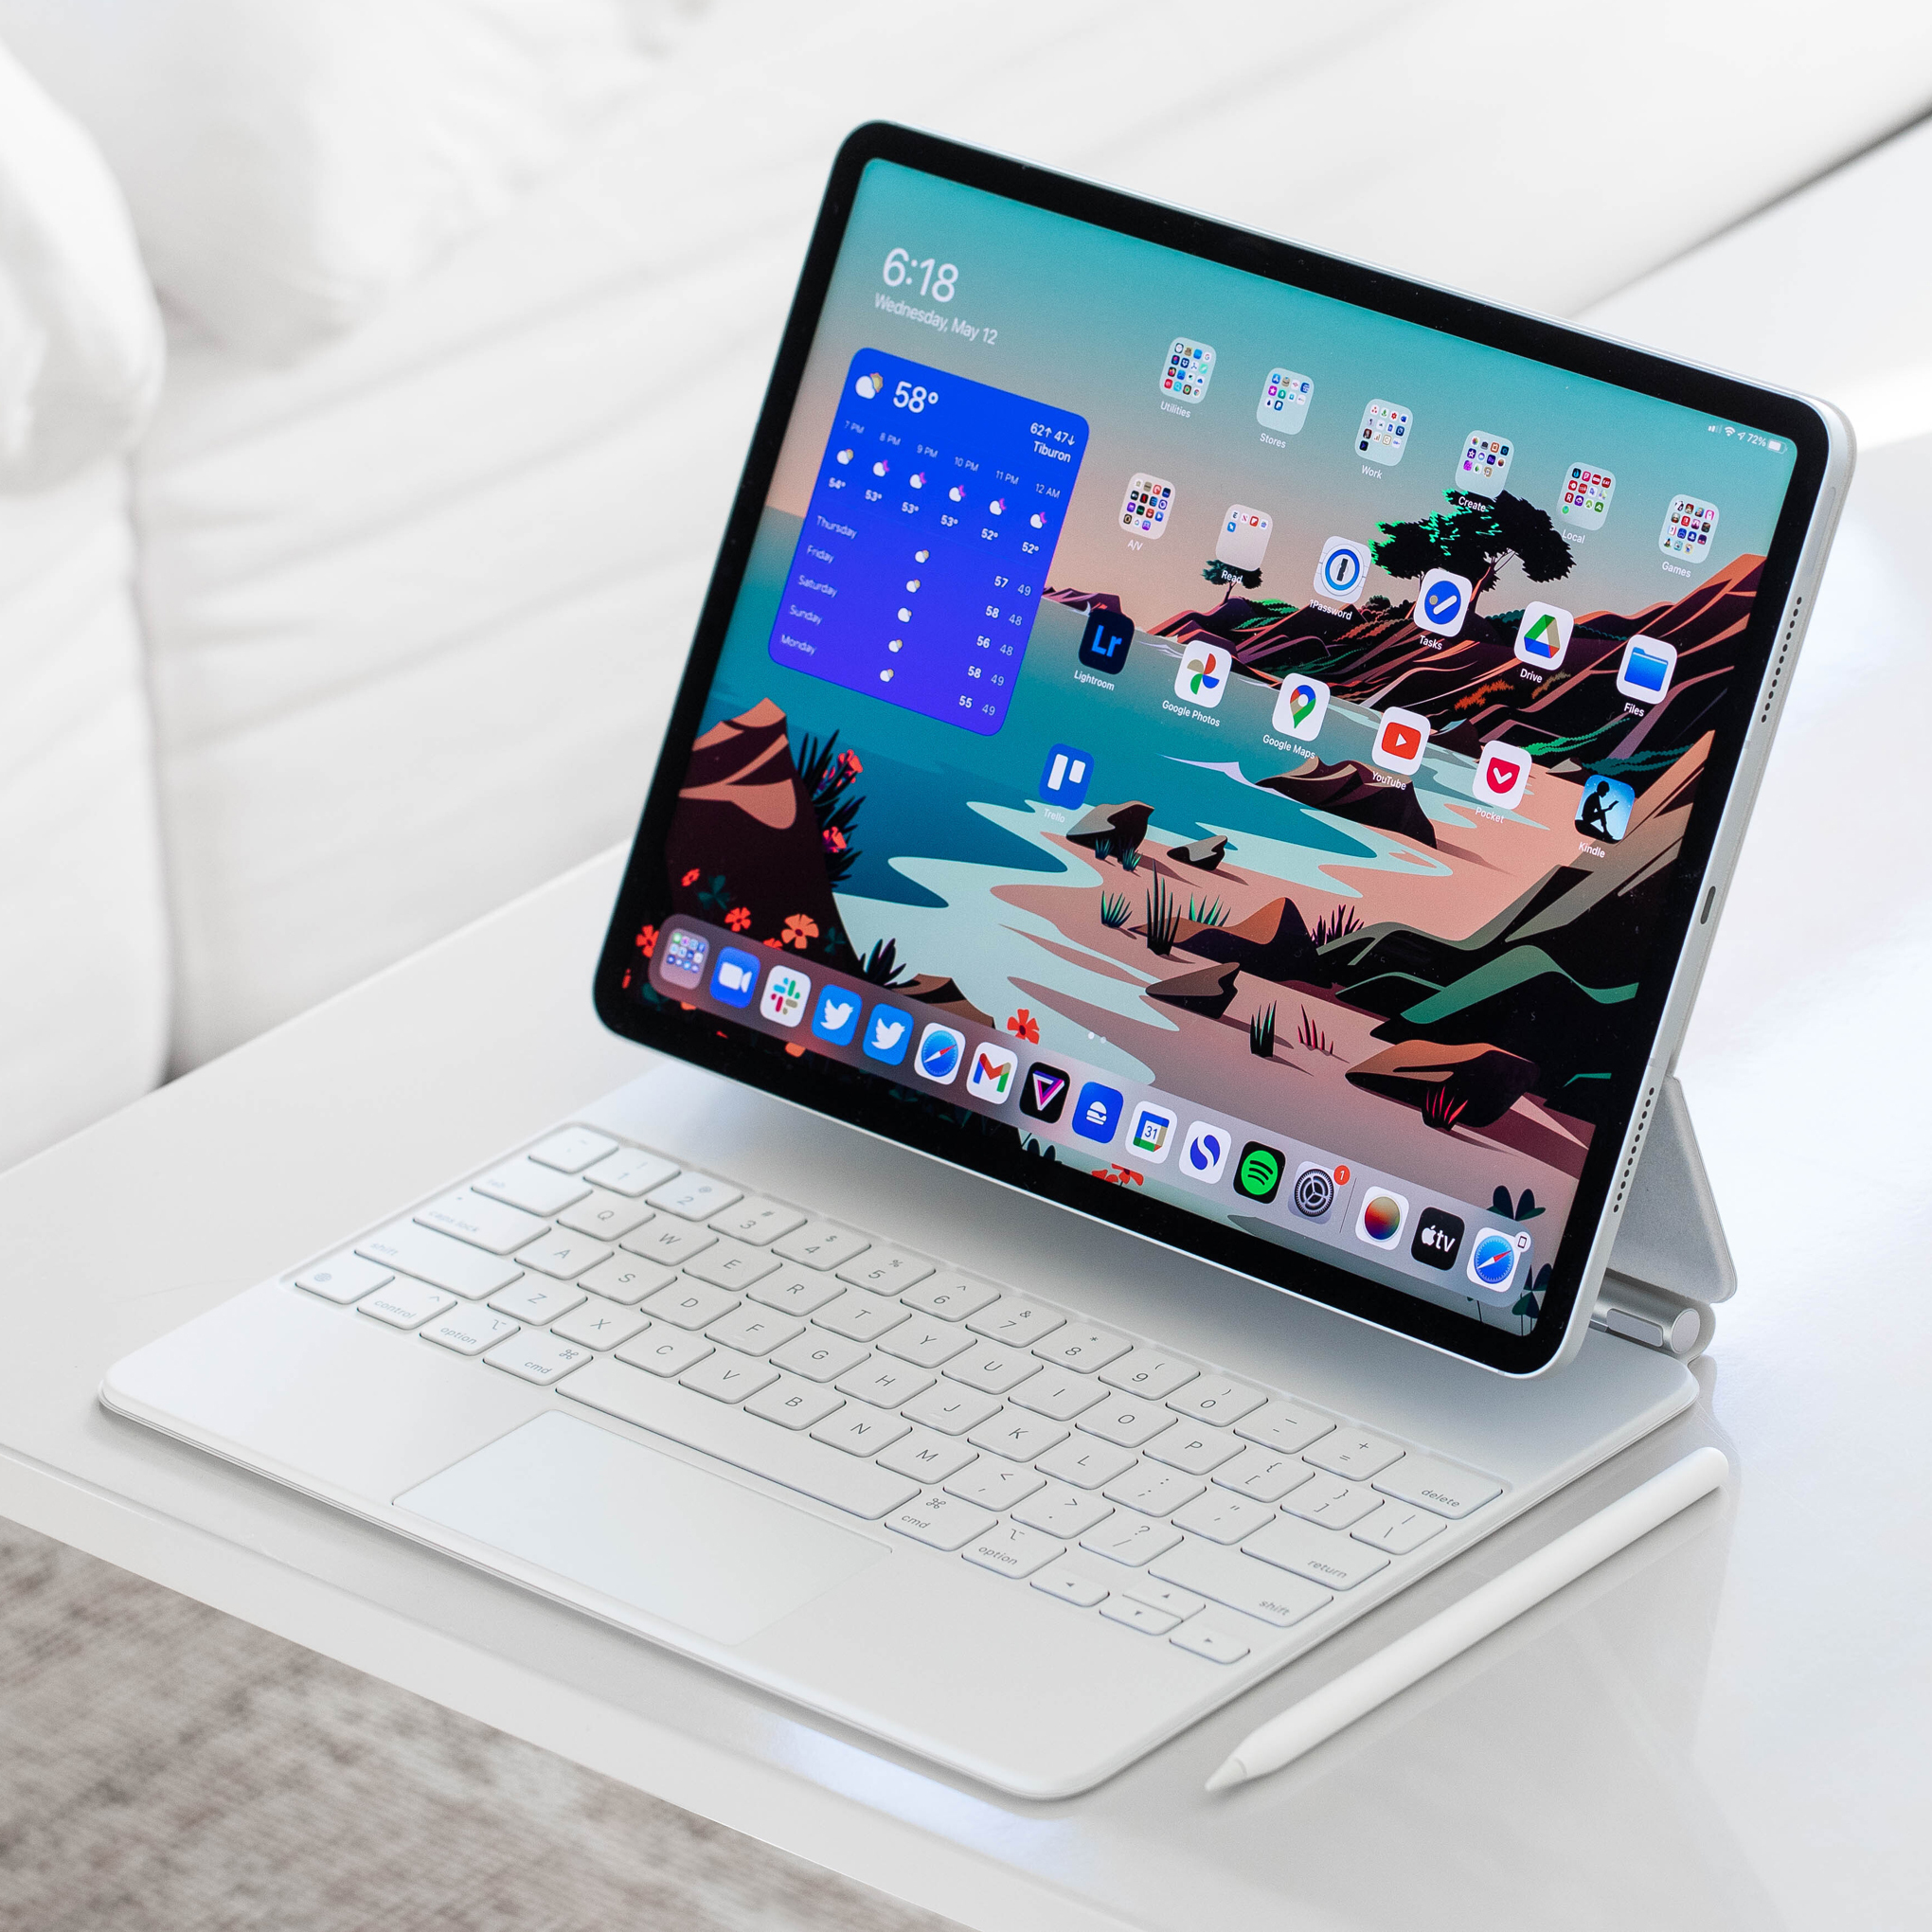 iPad Pro (2021) review: M1 processor, Mini LED screen, and more